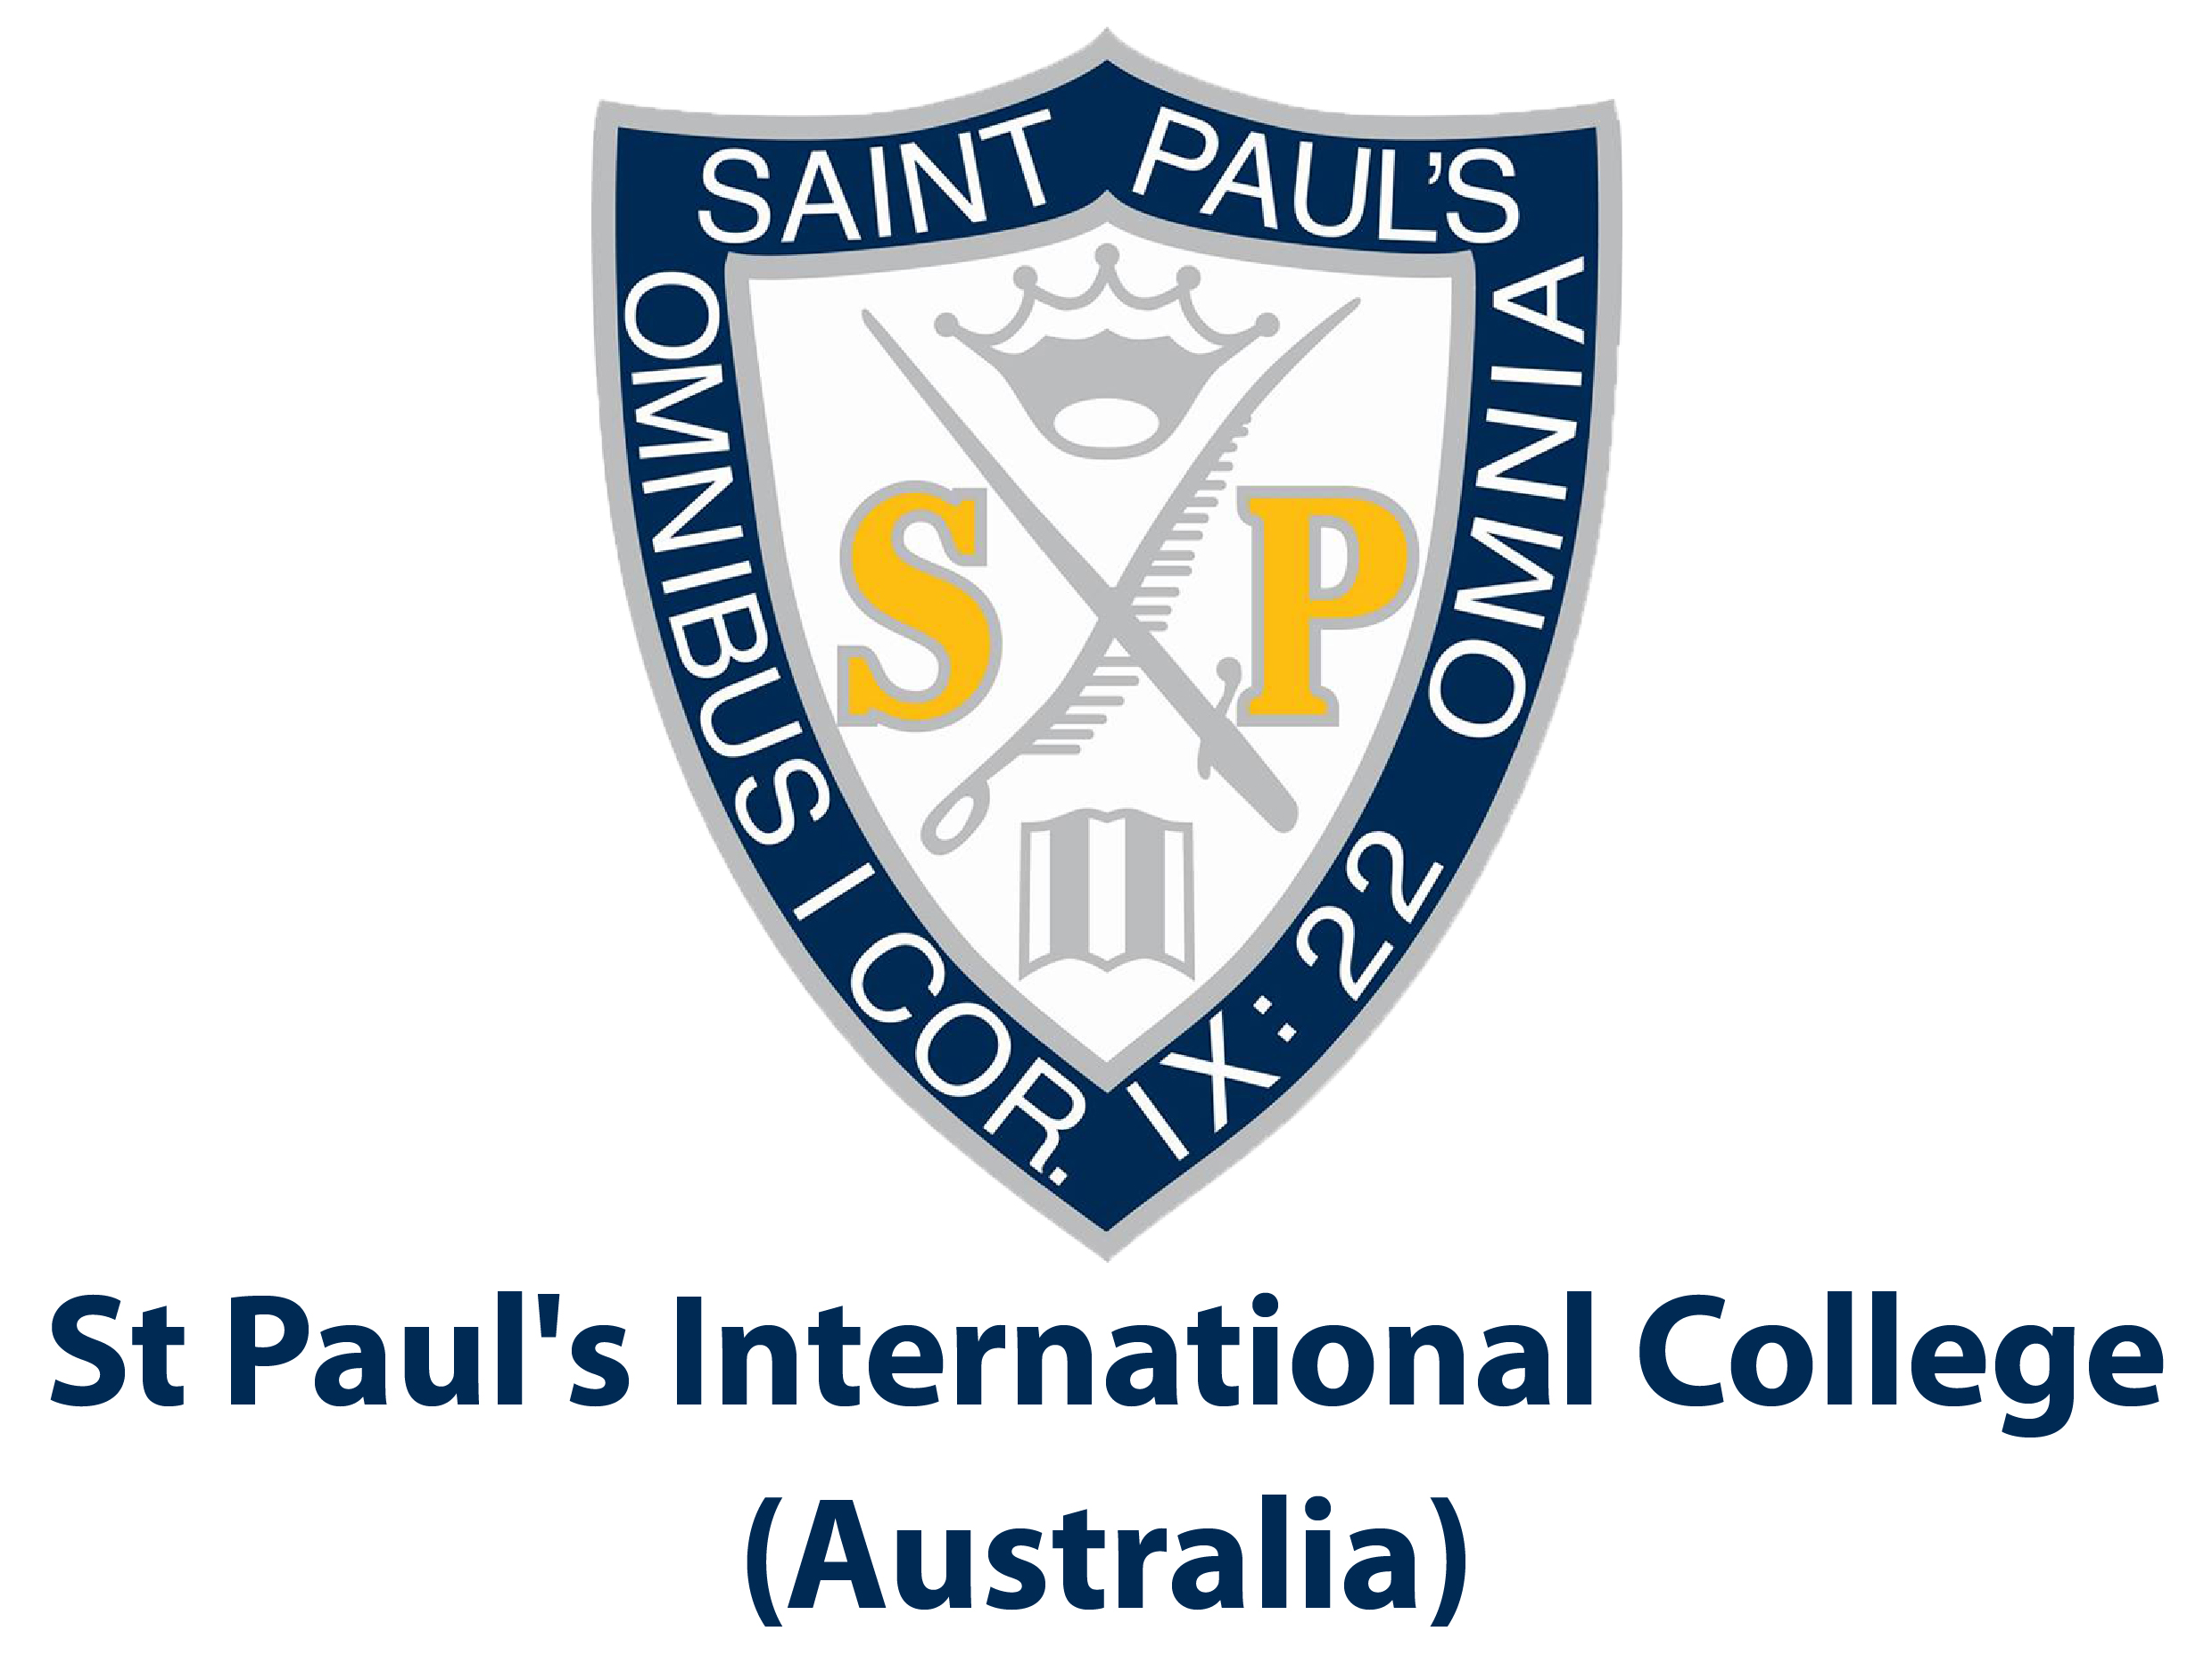 St Paul's International College